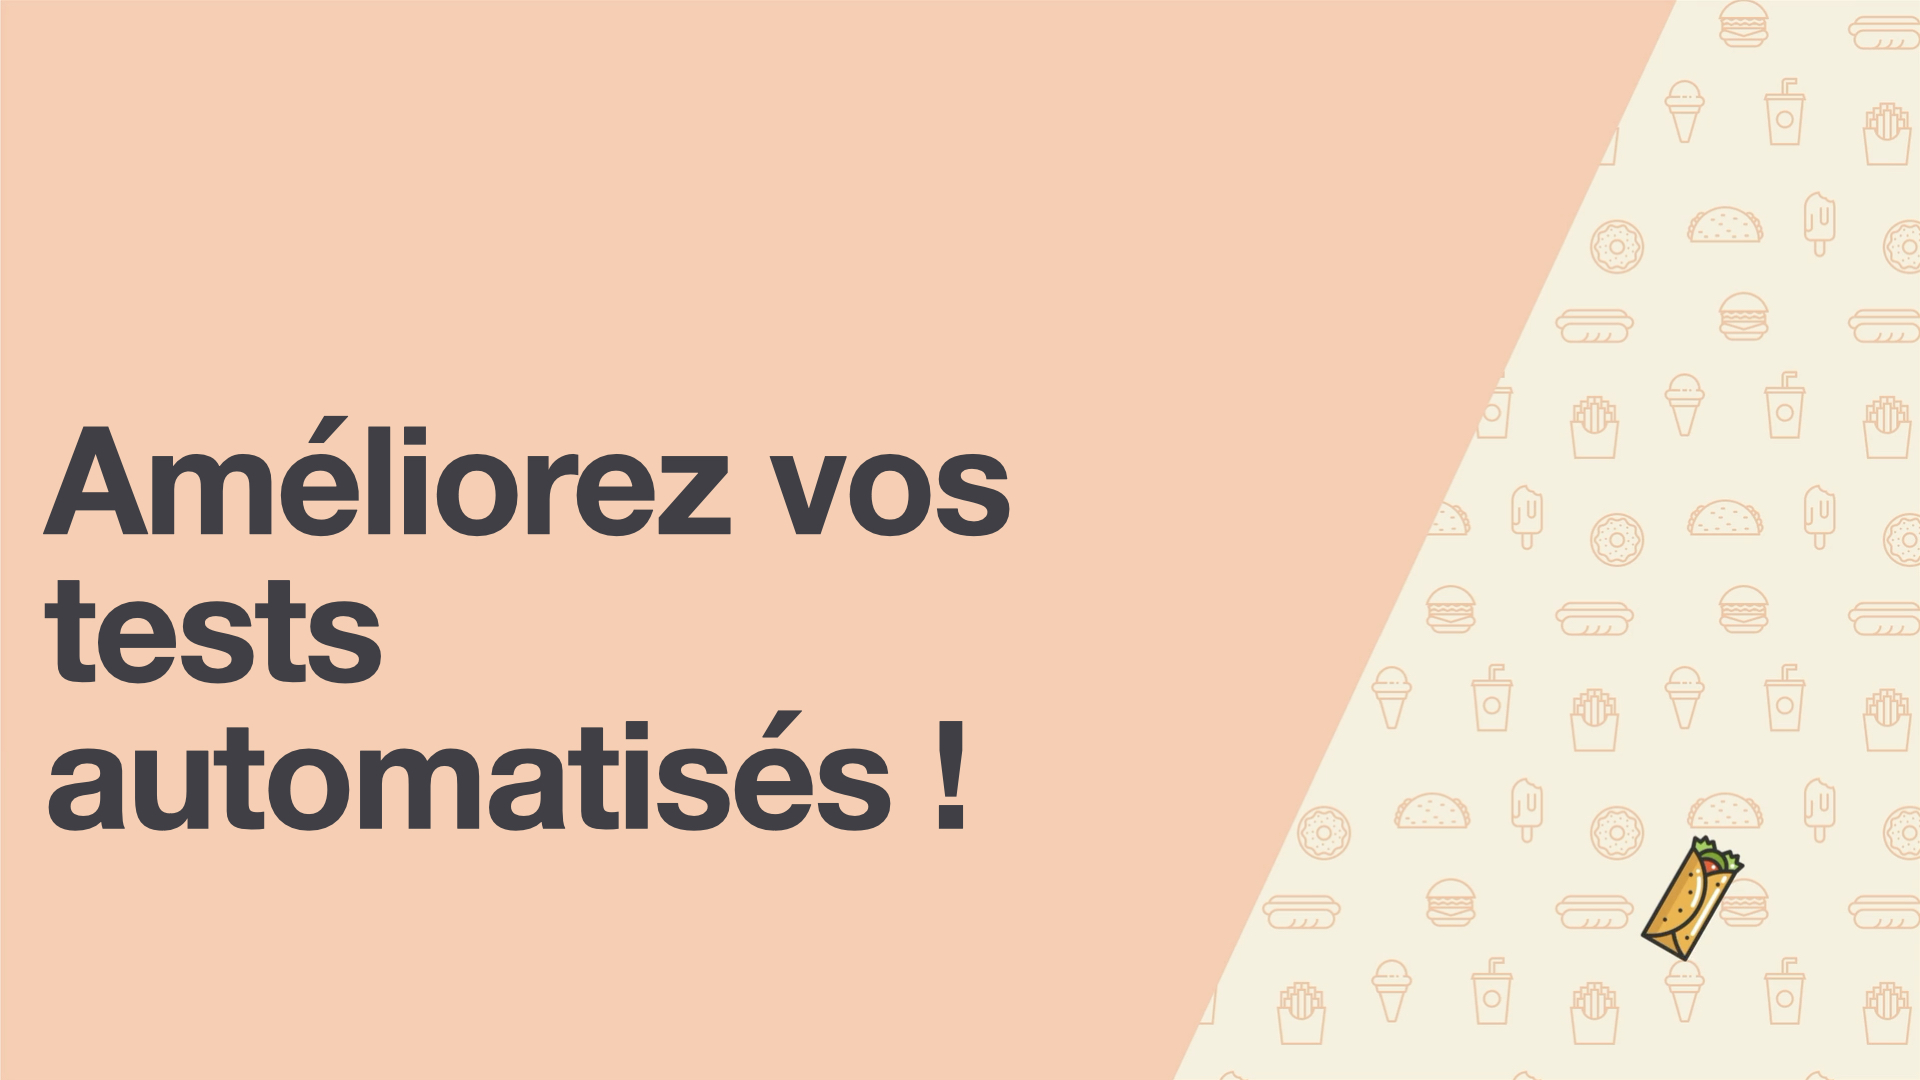 A cover picture saying "Améliorez vos tests automatisés" with a burrito.